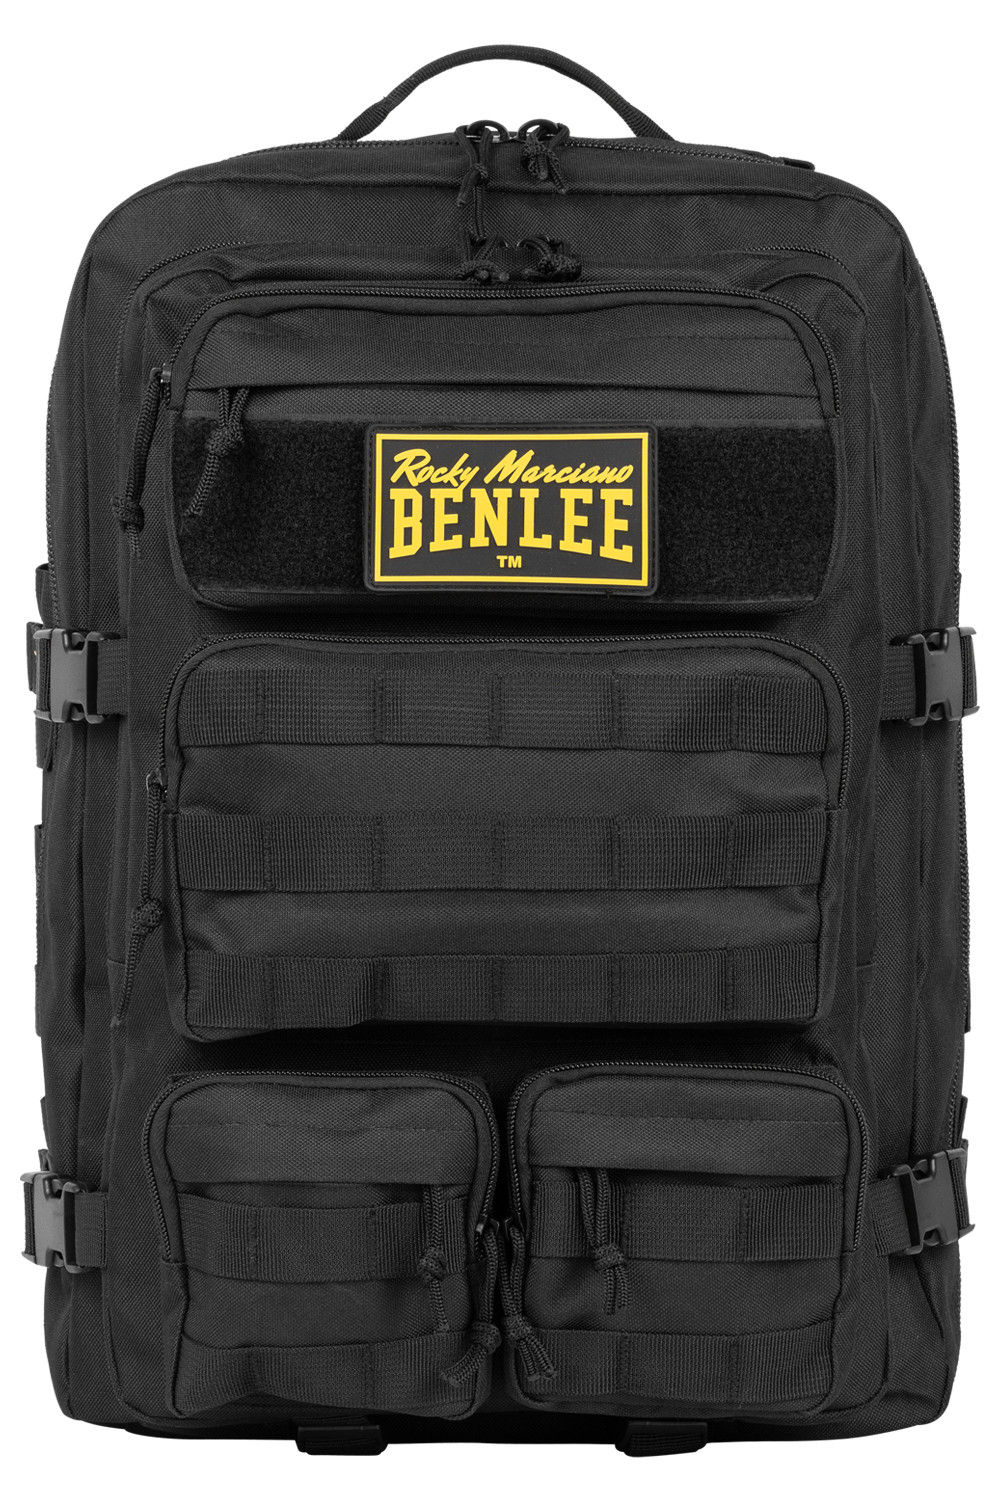 Benlee Backpack